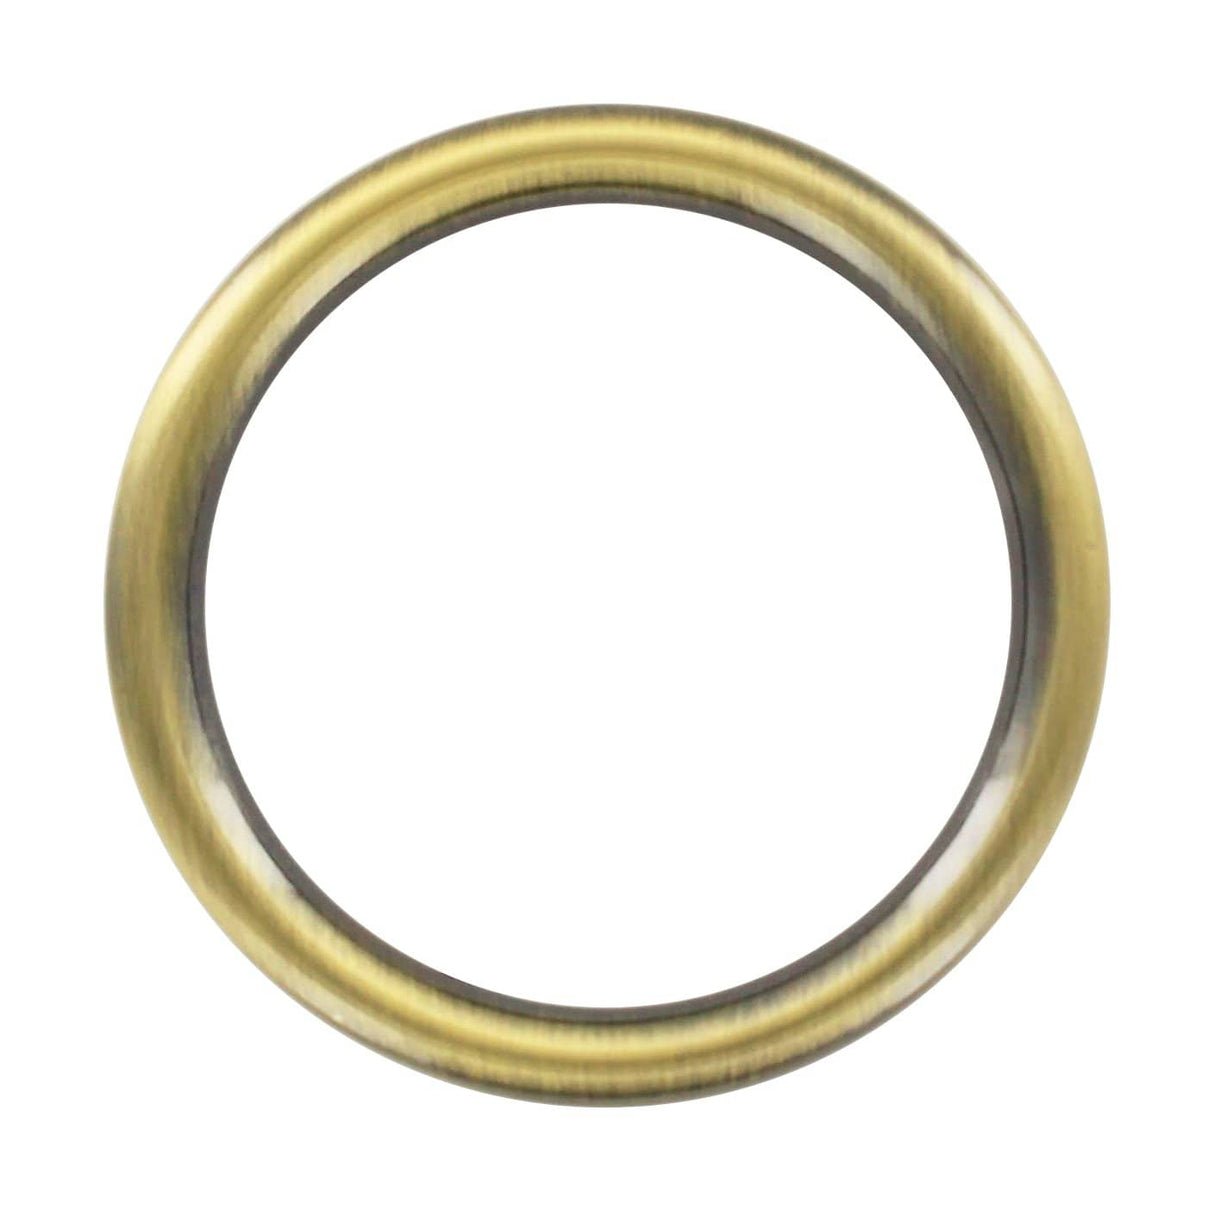 Ohio Travel Bag Rings & Slides 2" Antique Brass, Cast Flat Round Ring, Zinc Alloy, #P-2550-ANTB P-2550-ANTB